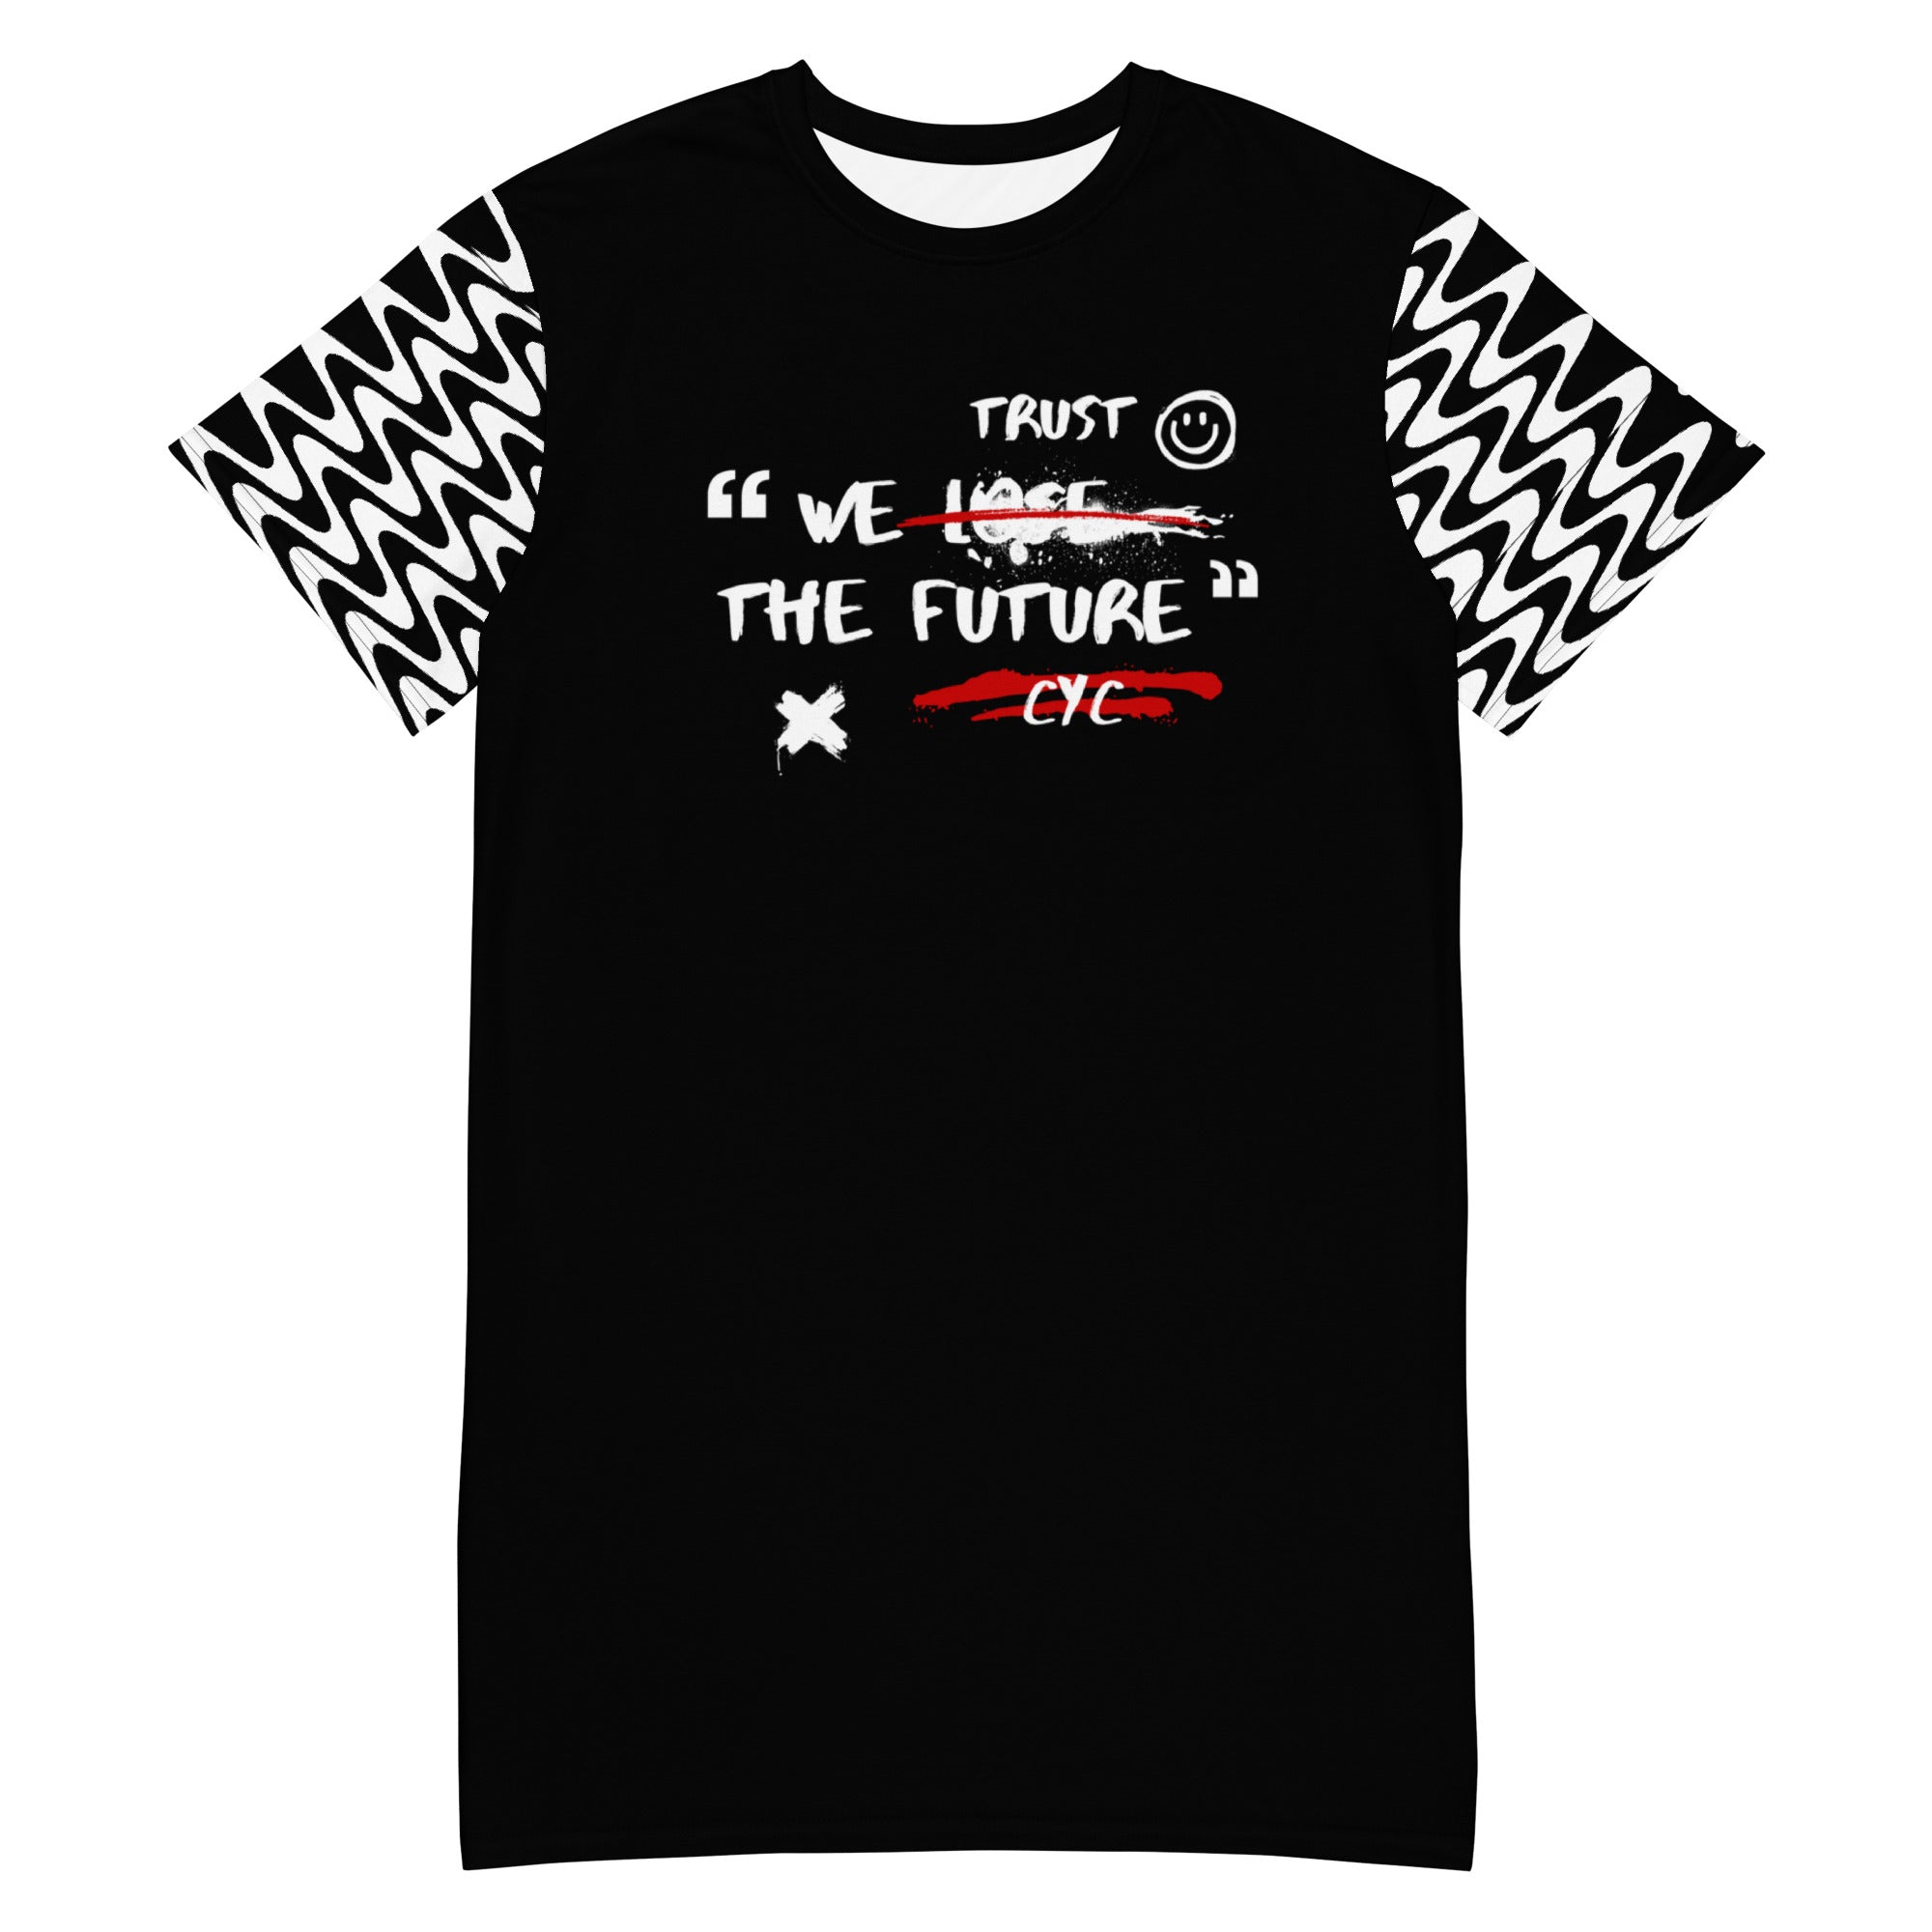 "The Future" T-shirt dress